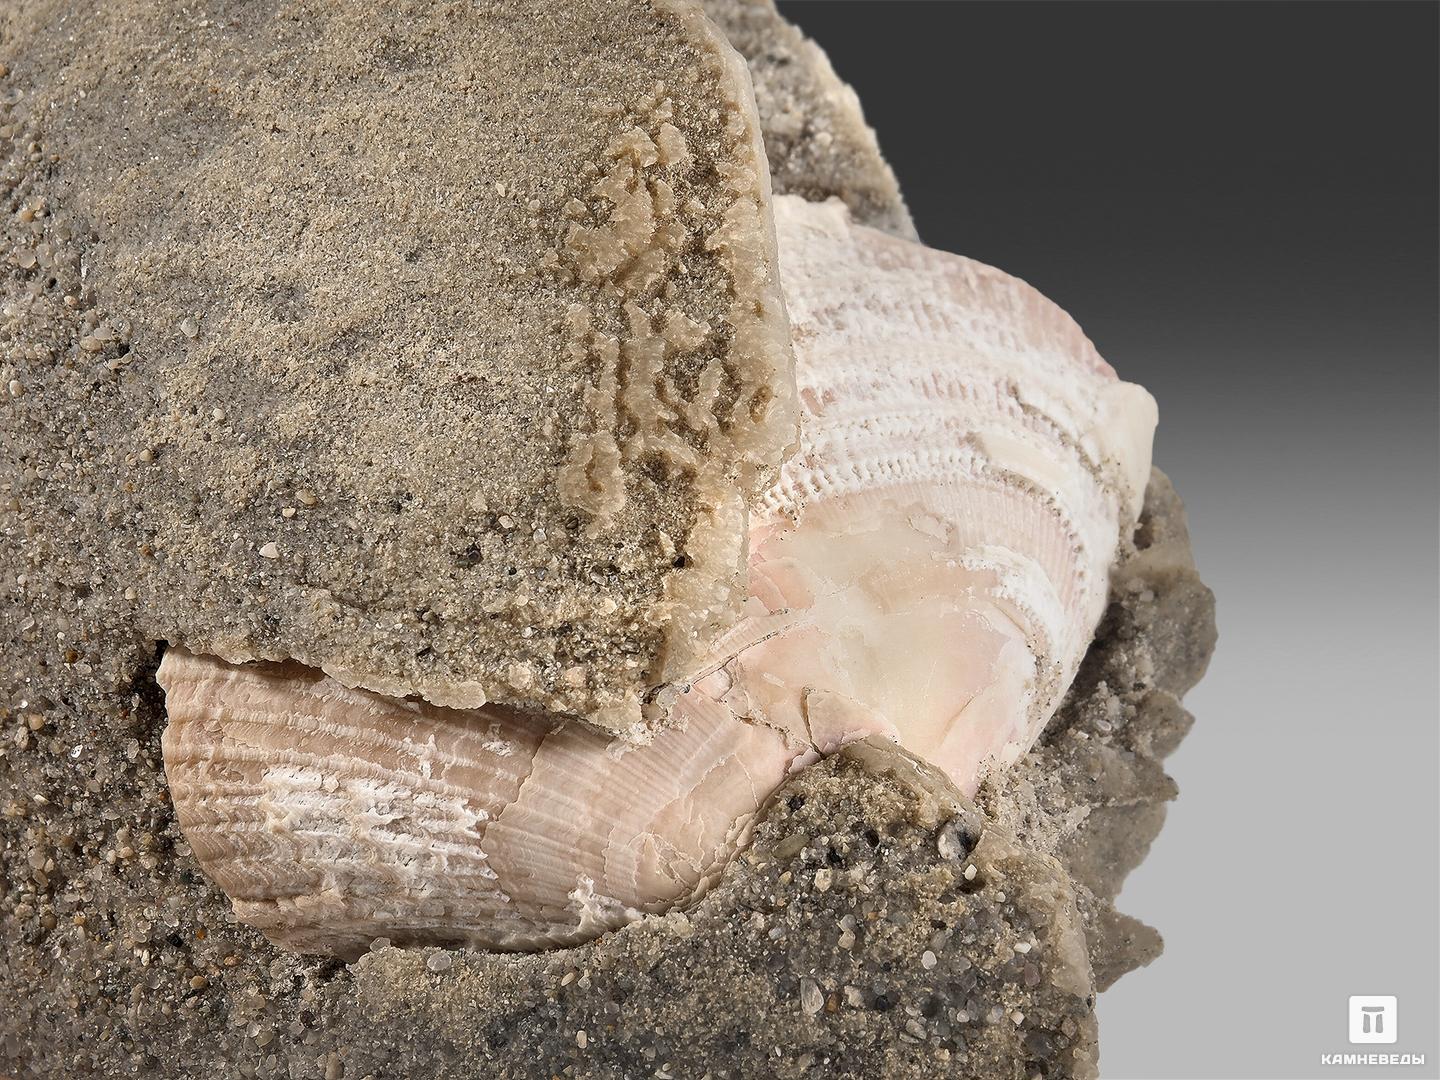 Створка моллюска в гипсовой розе, 10,3х8,7х4,7 см, 22563, фото 2